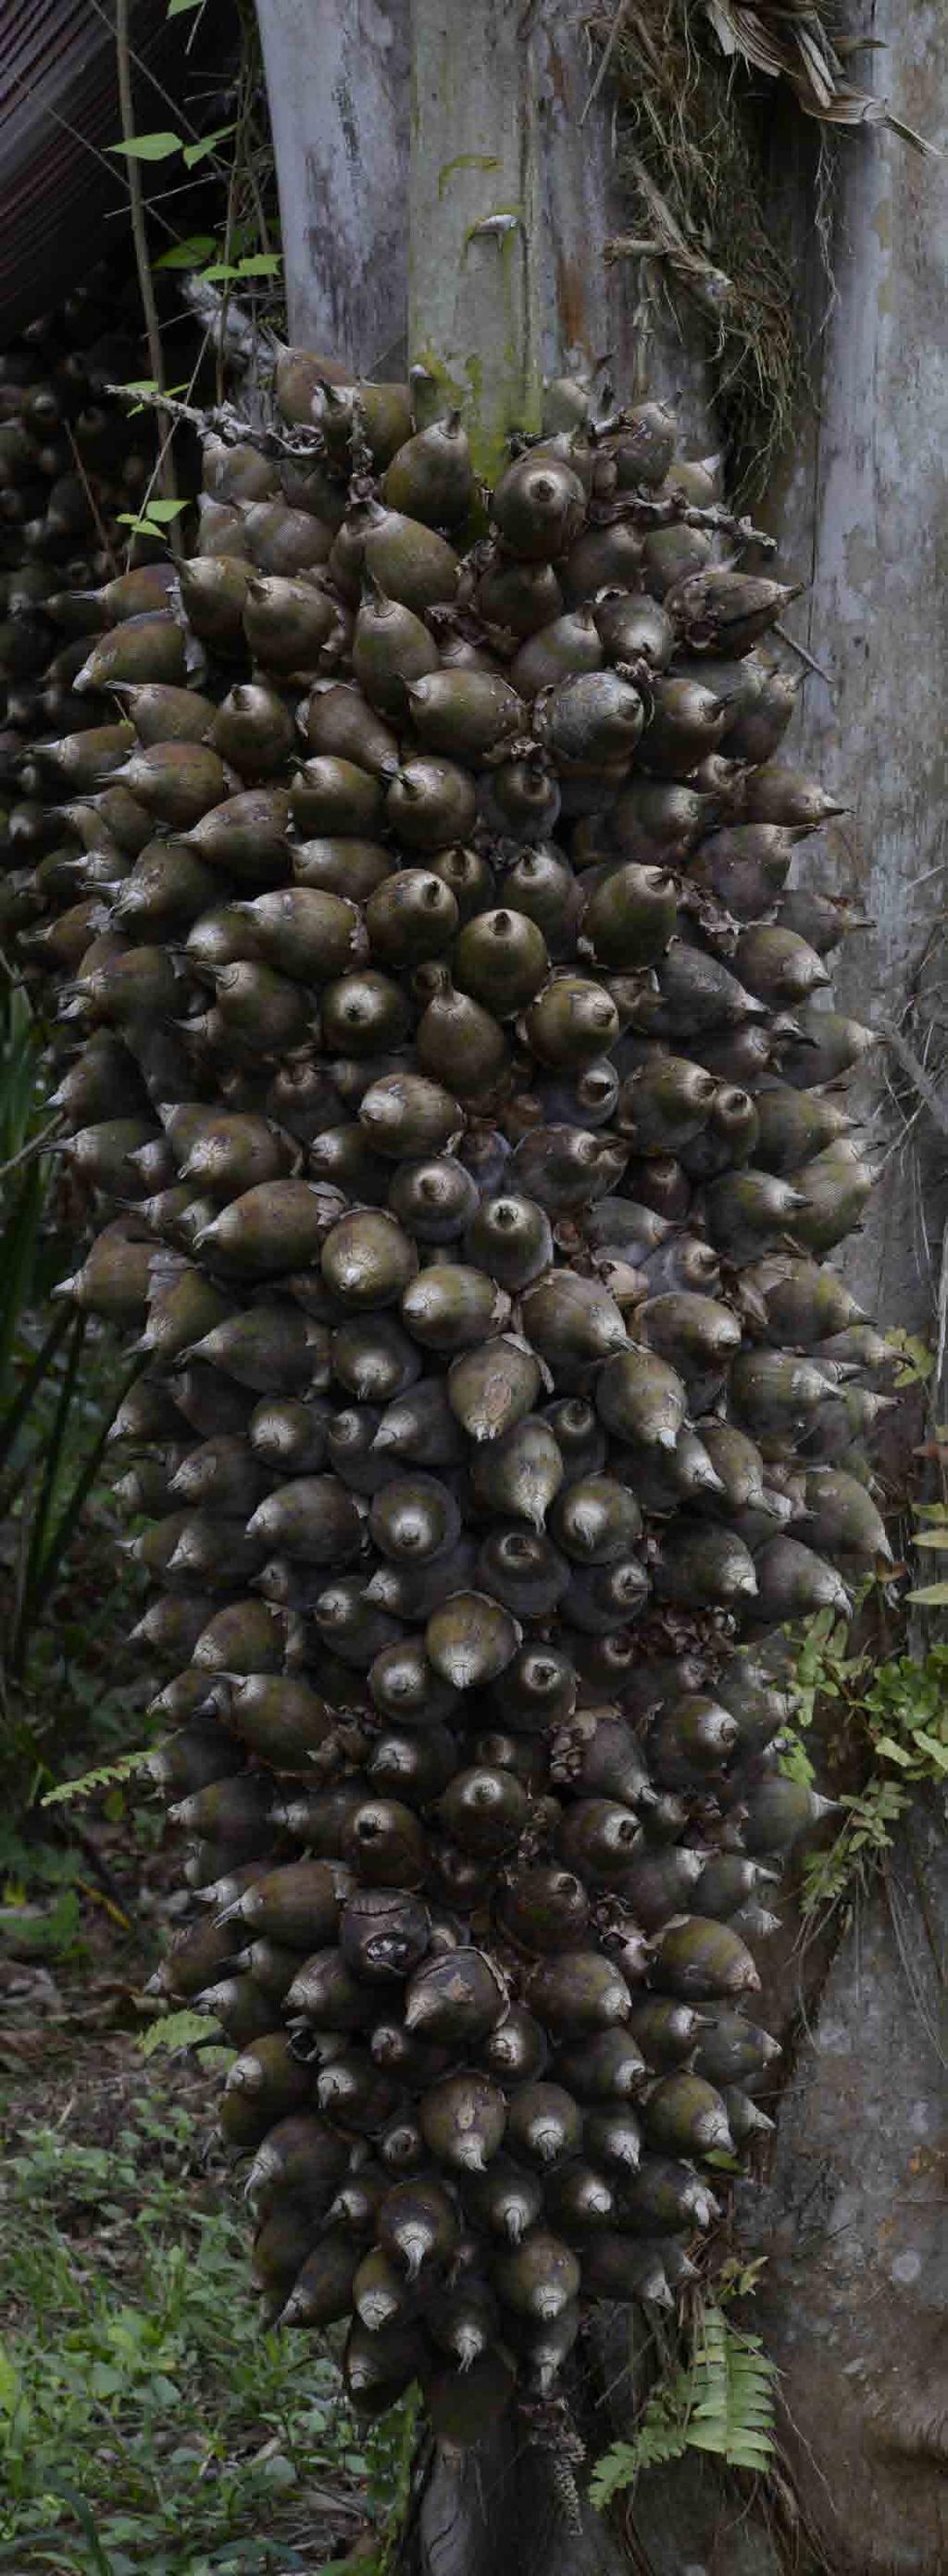 Nuts, specifically on Palm trees Cerpinus ceroliniana Walt. (Martin et al. 1987:83).